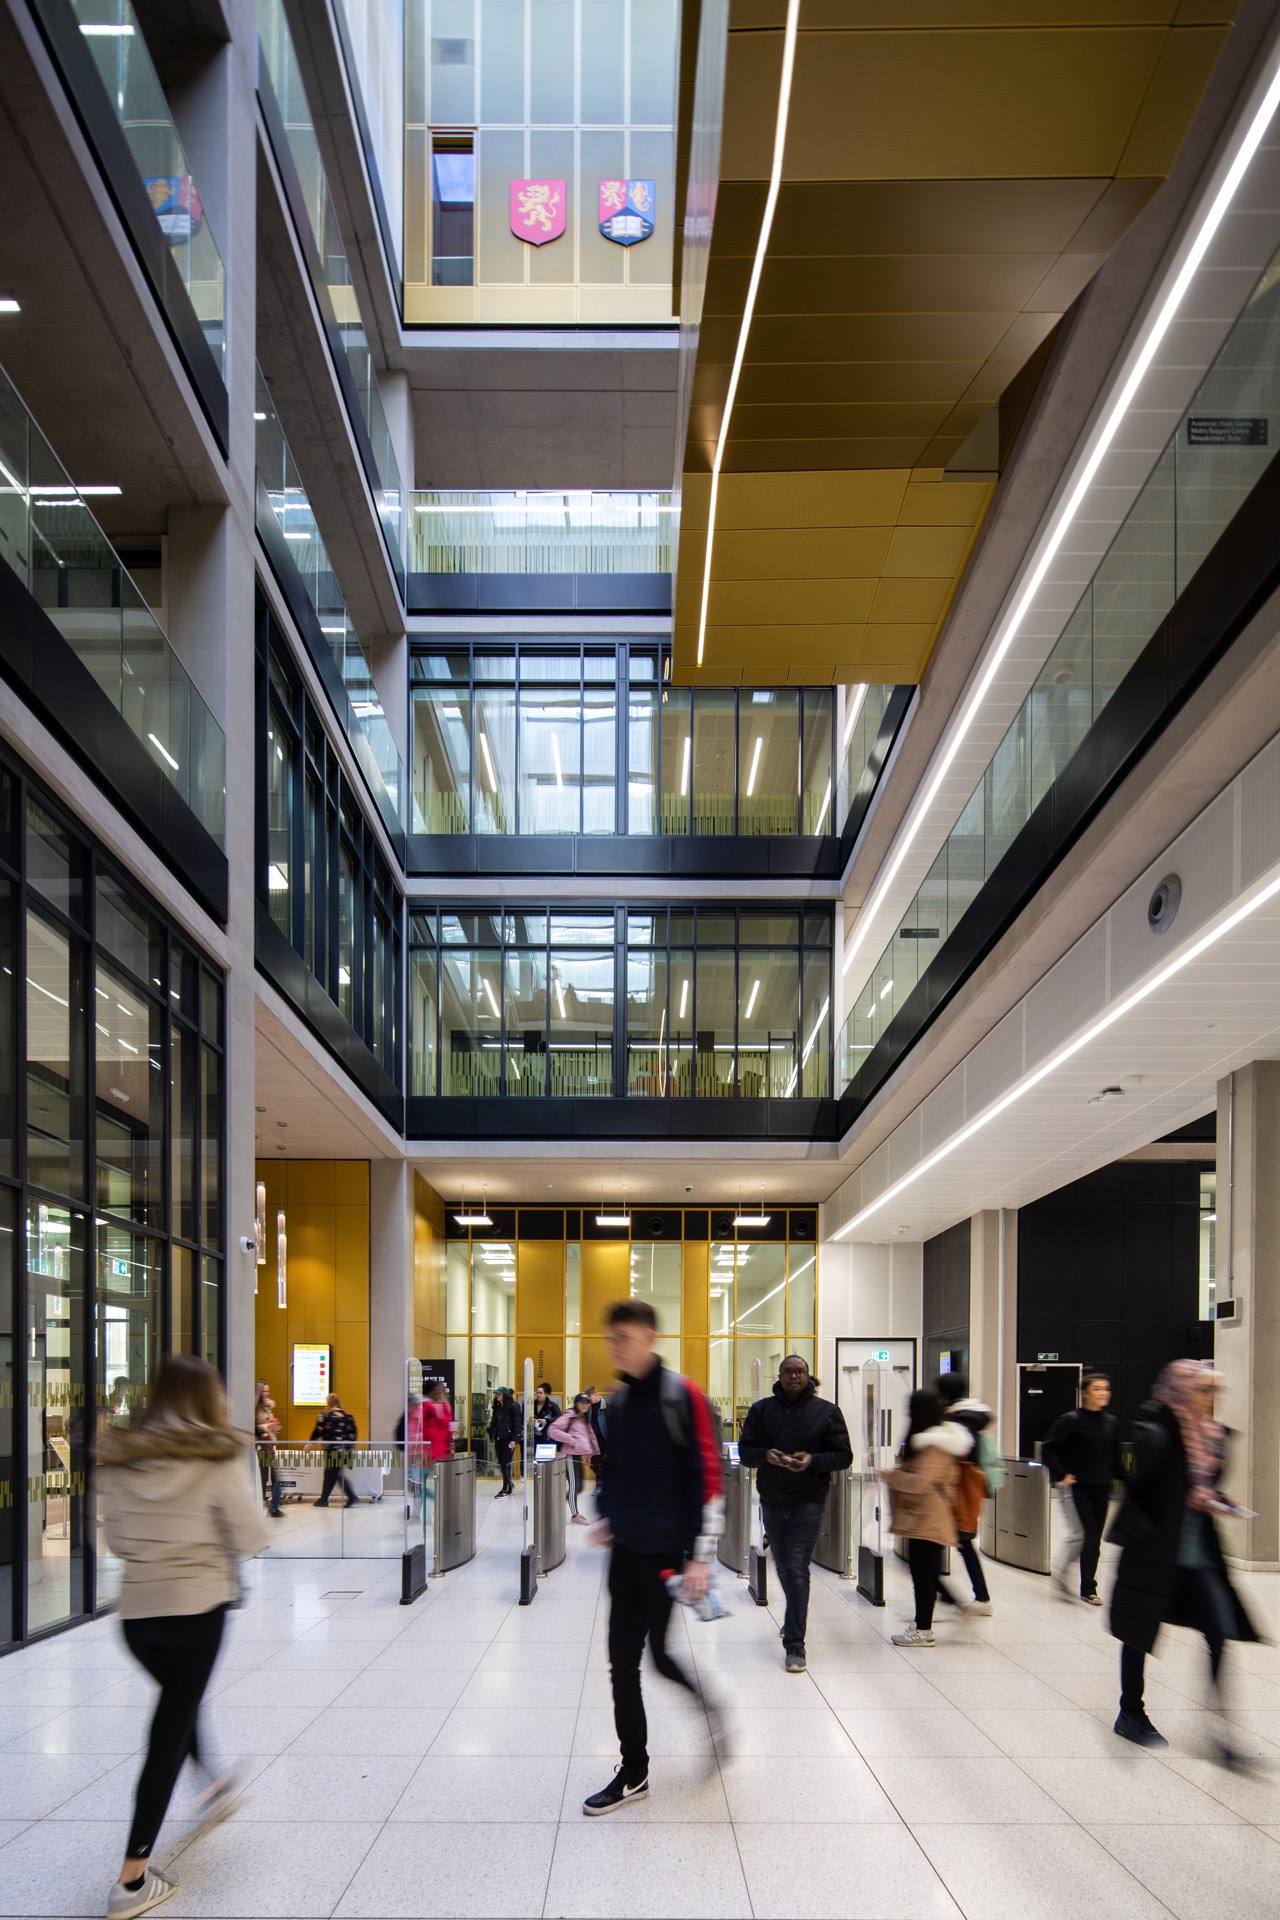 Main Library University of Birmingham building architecture design interior view